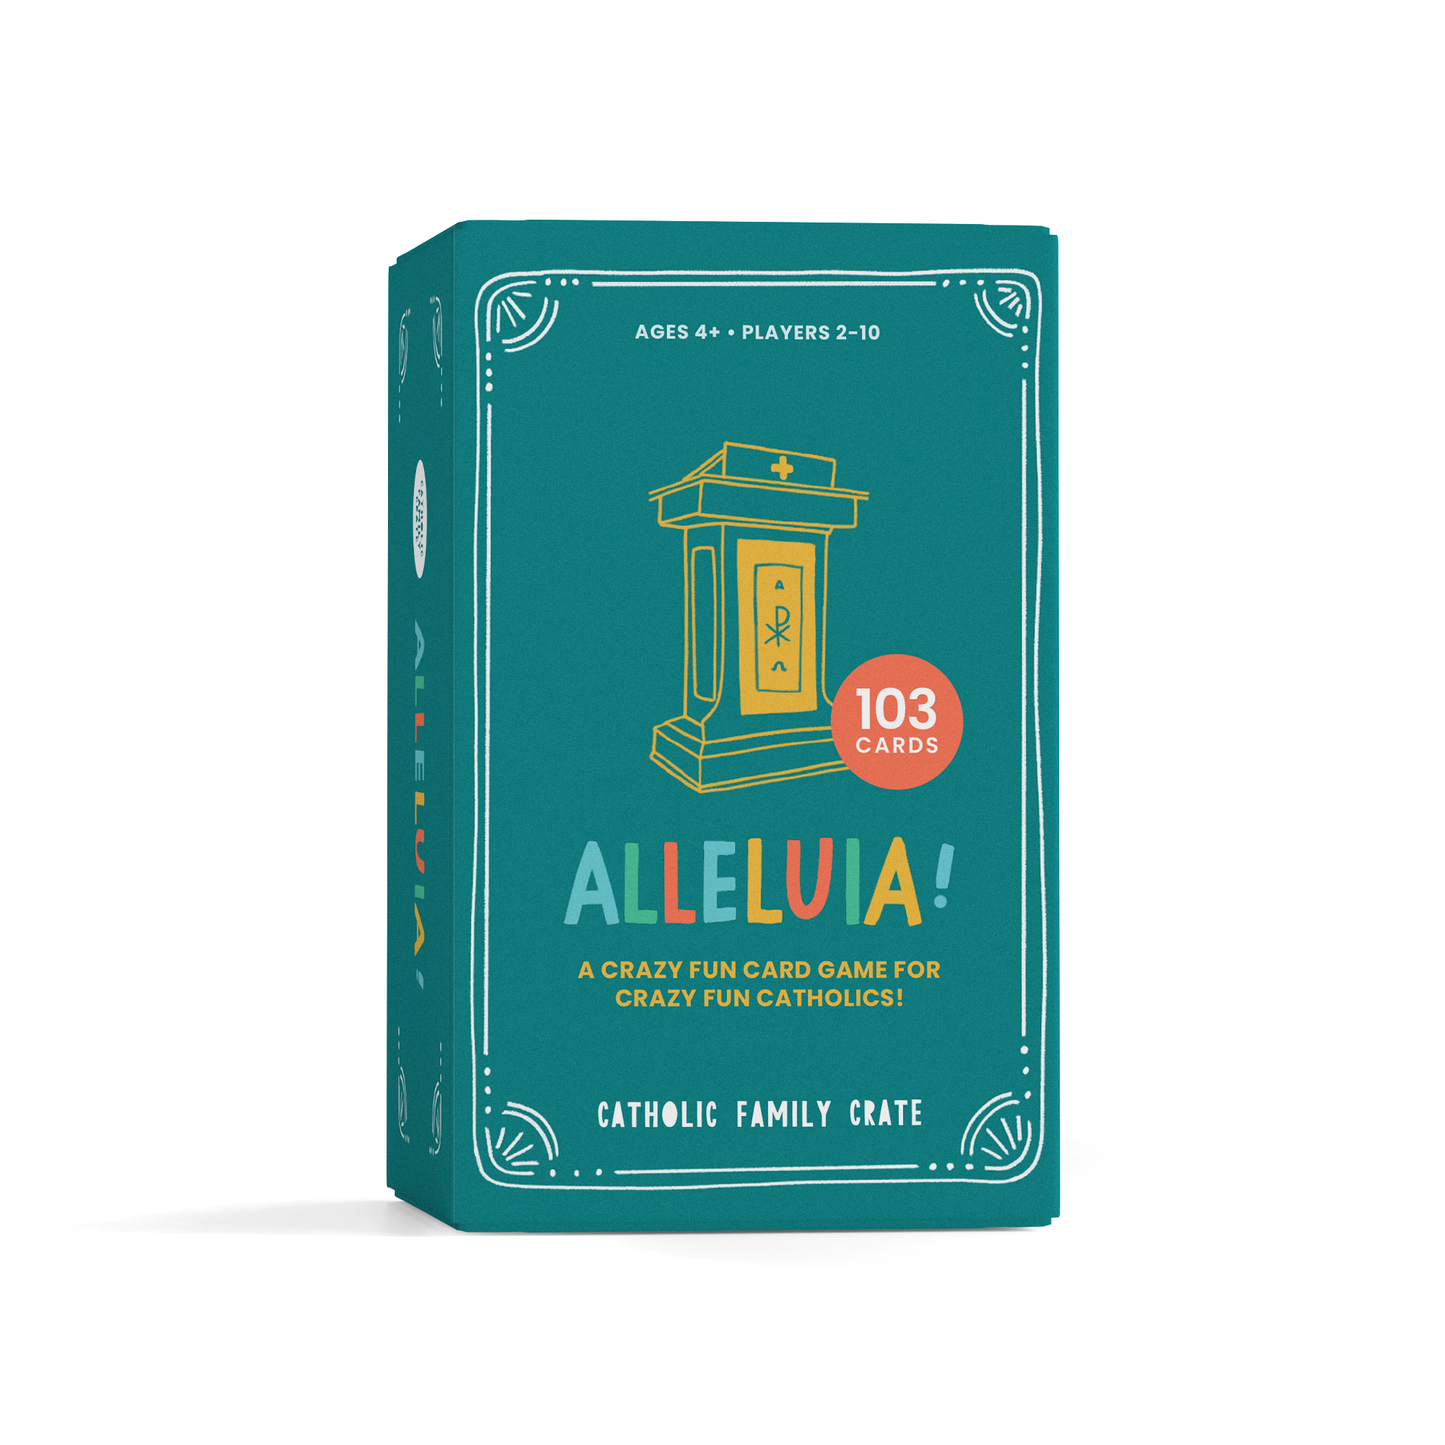 "Alleluia" Card Game